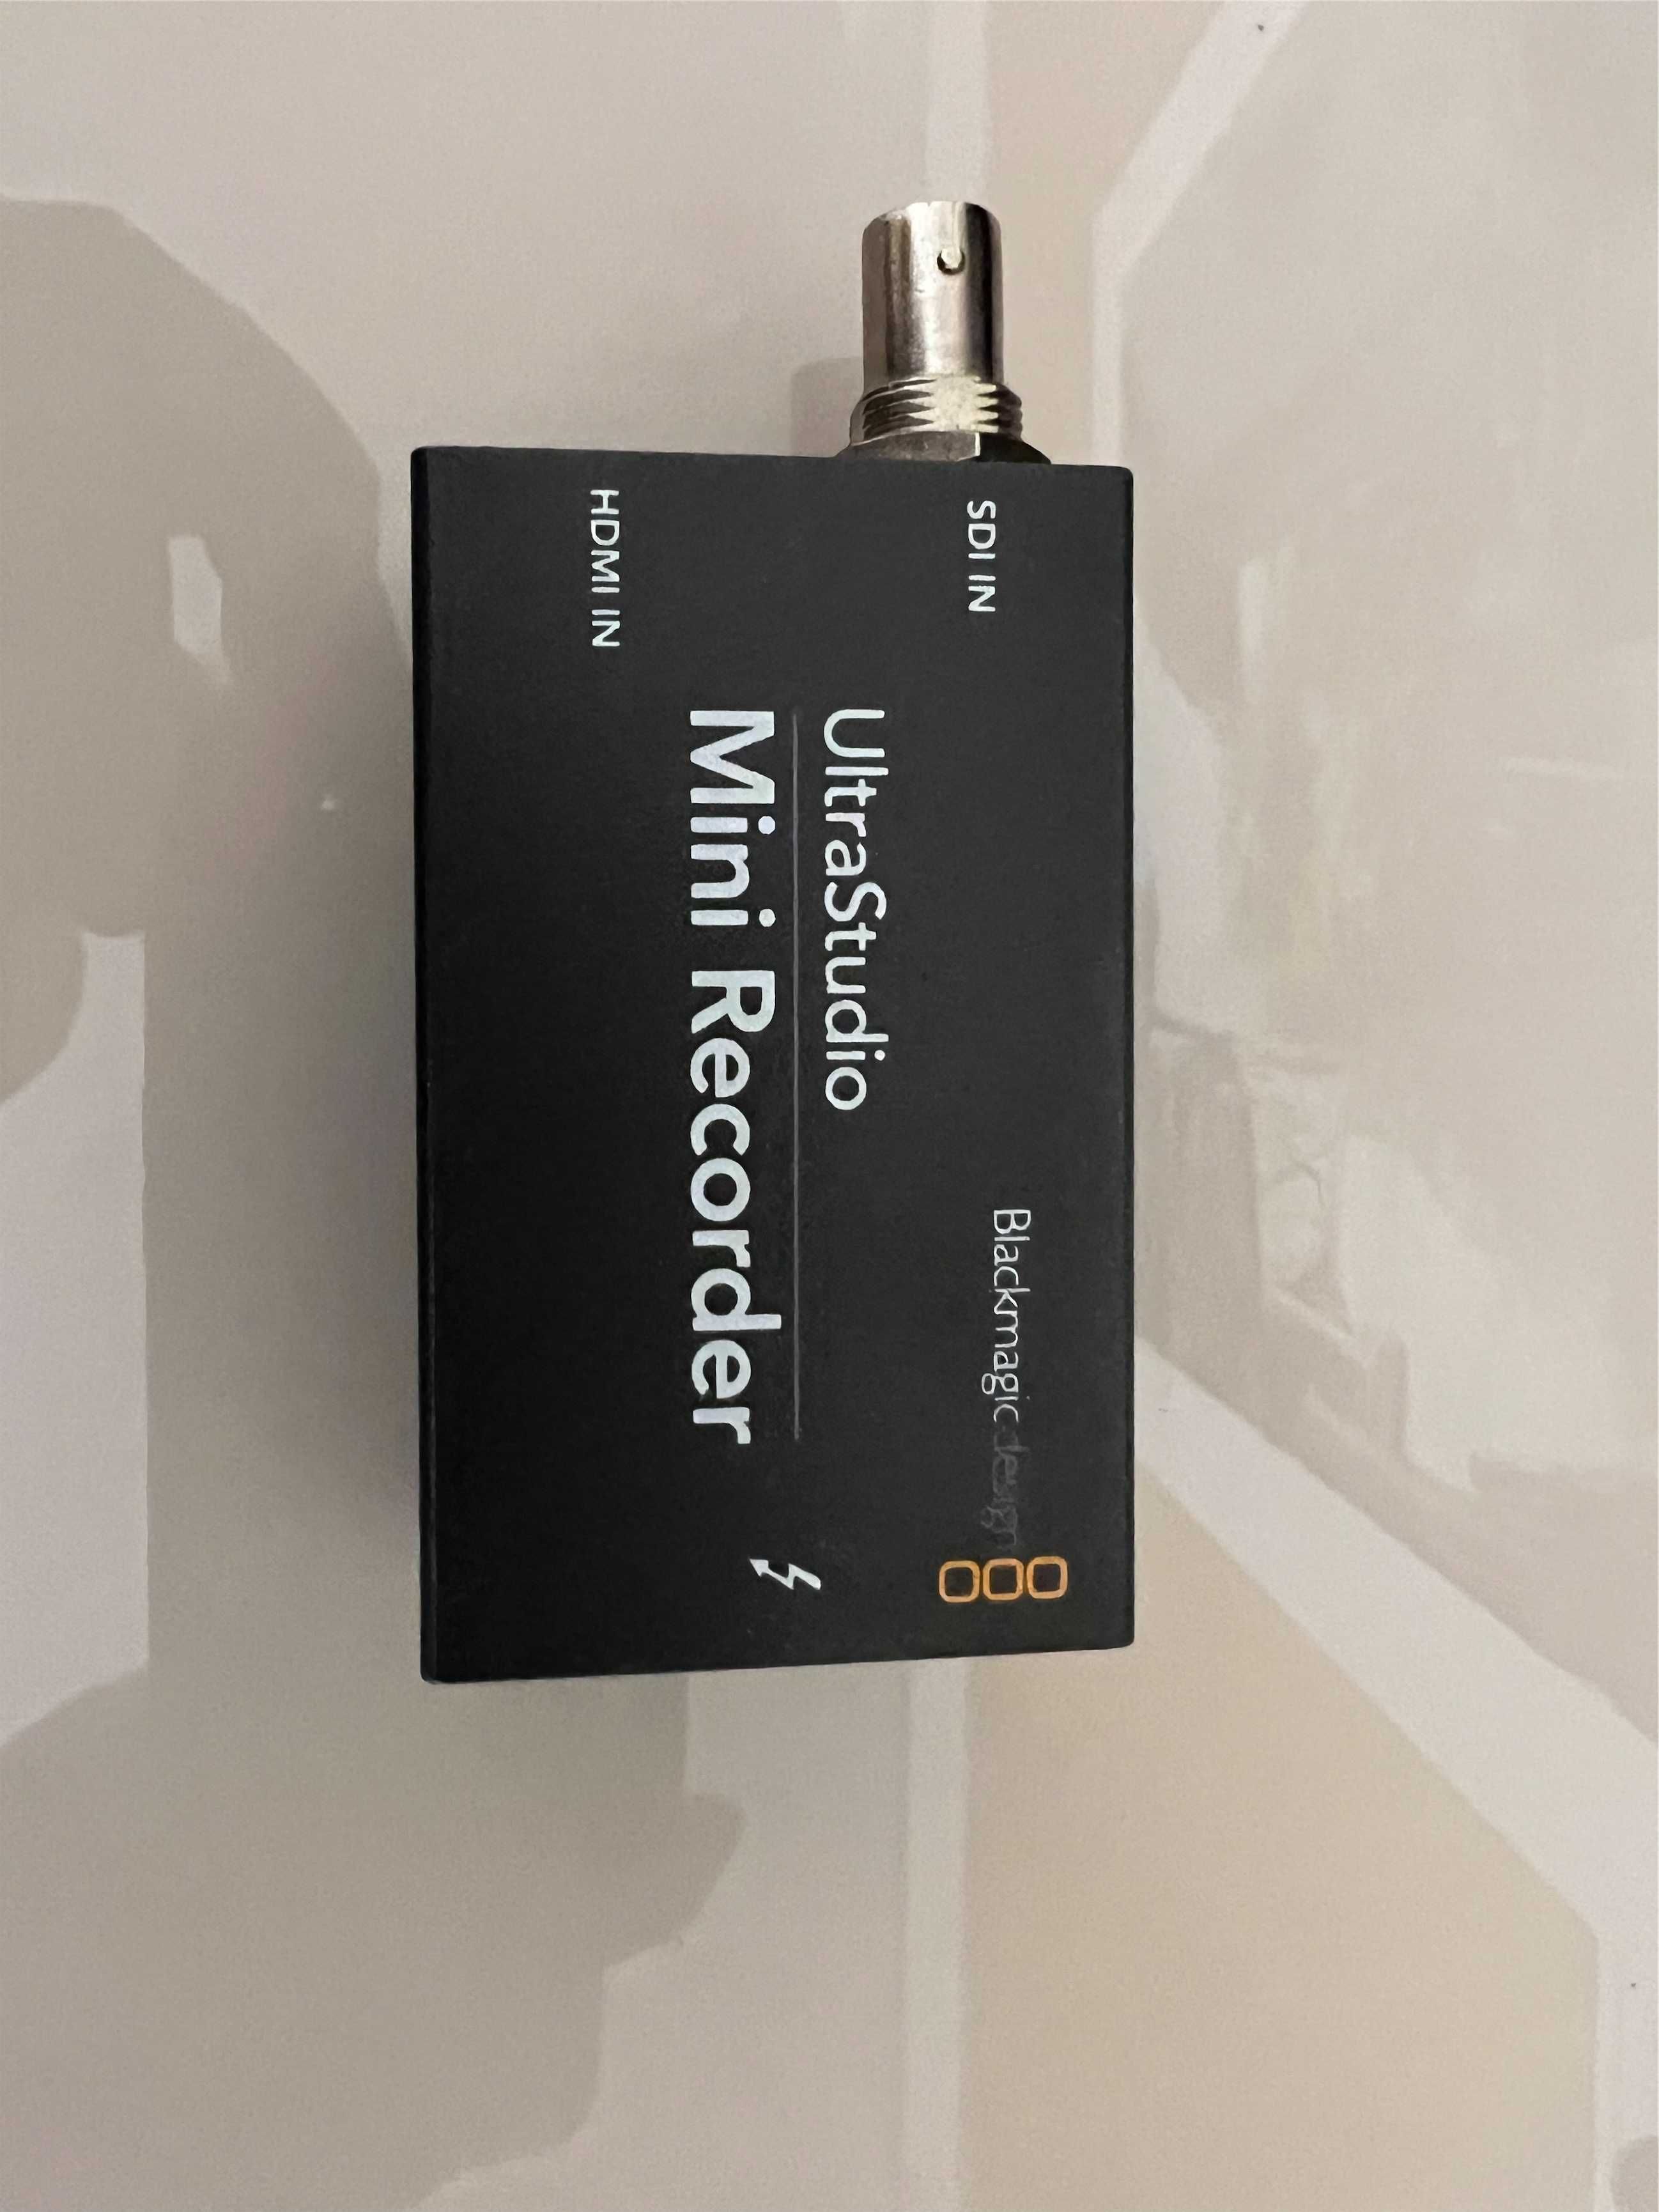 Blackmagic Design UltraStudio Mini Recorder